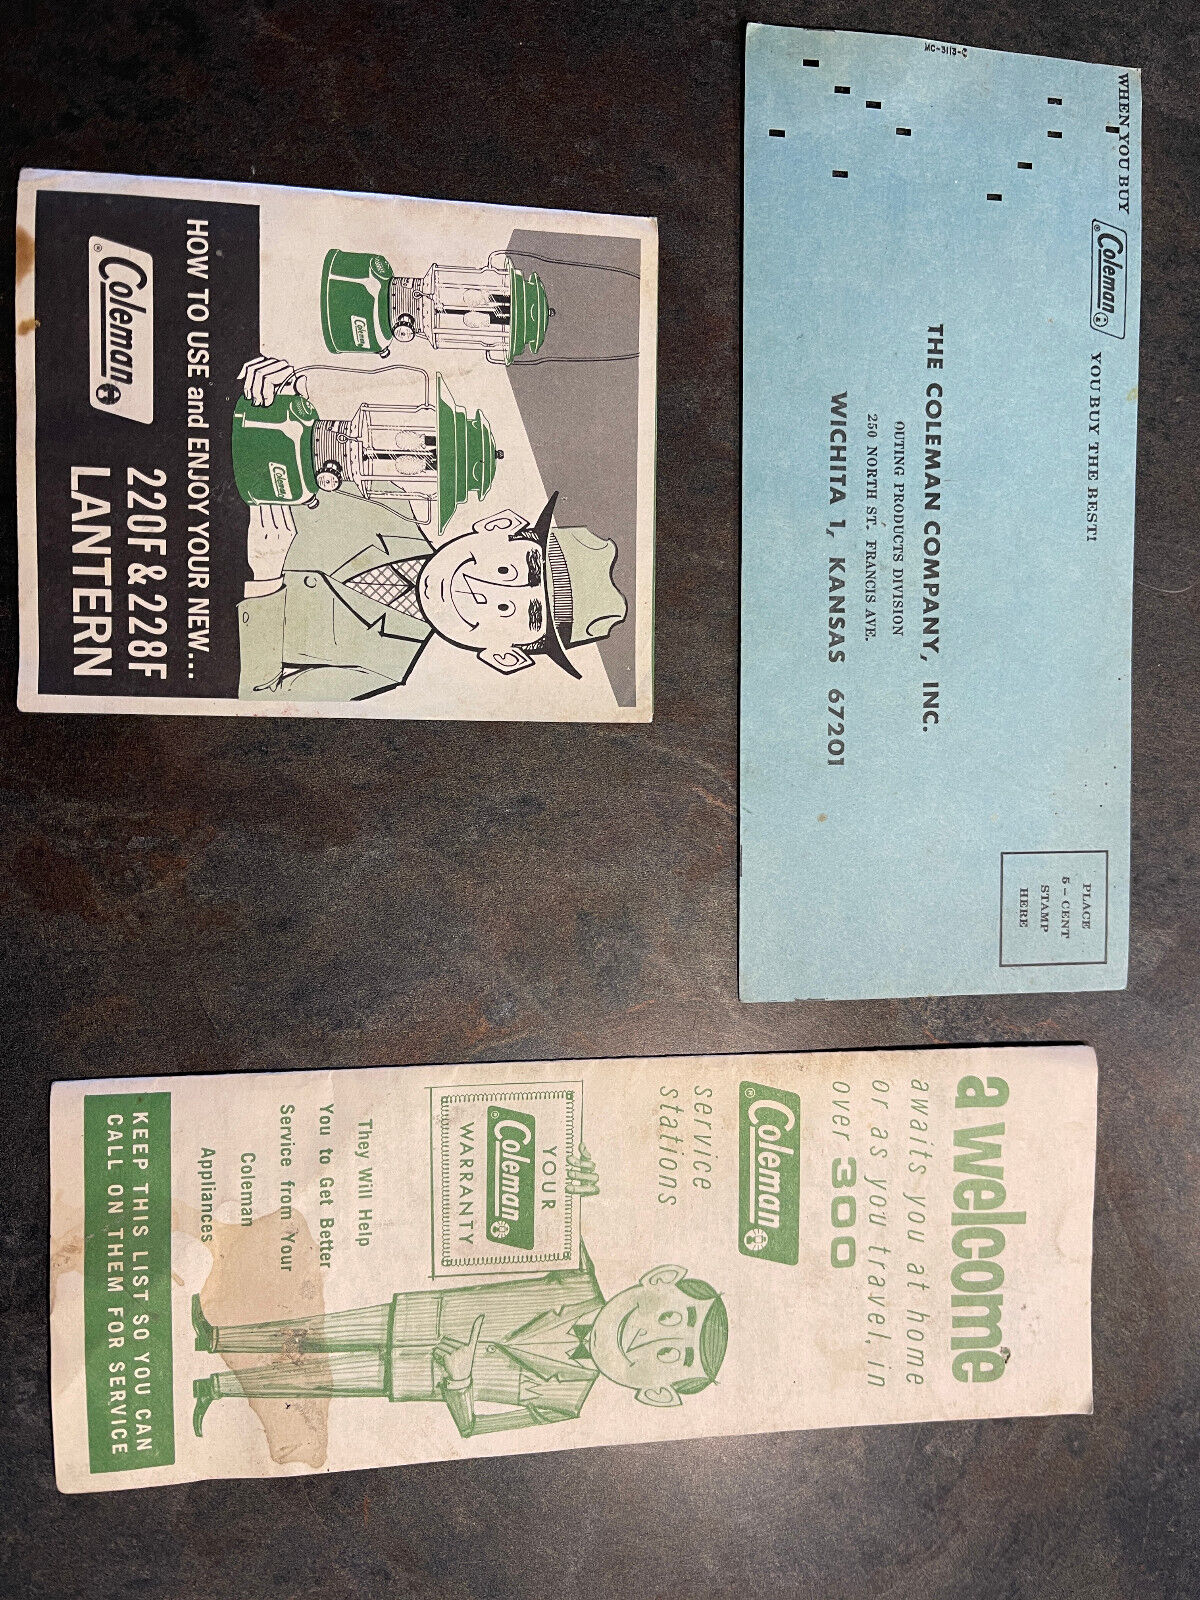 COLEMAN LANTERN Warranty Card, Service Center Card, 220F & 228F Manual Vintage